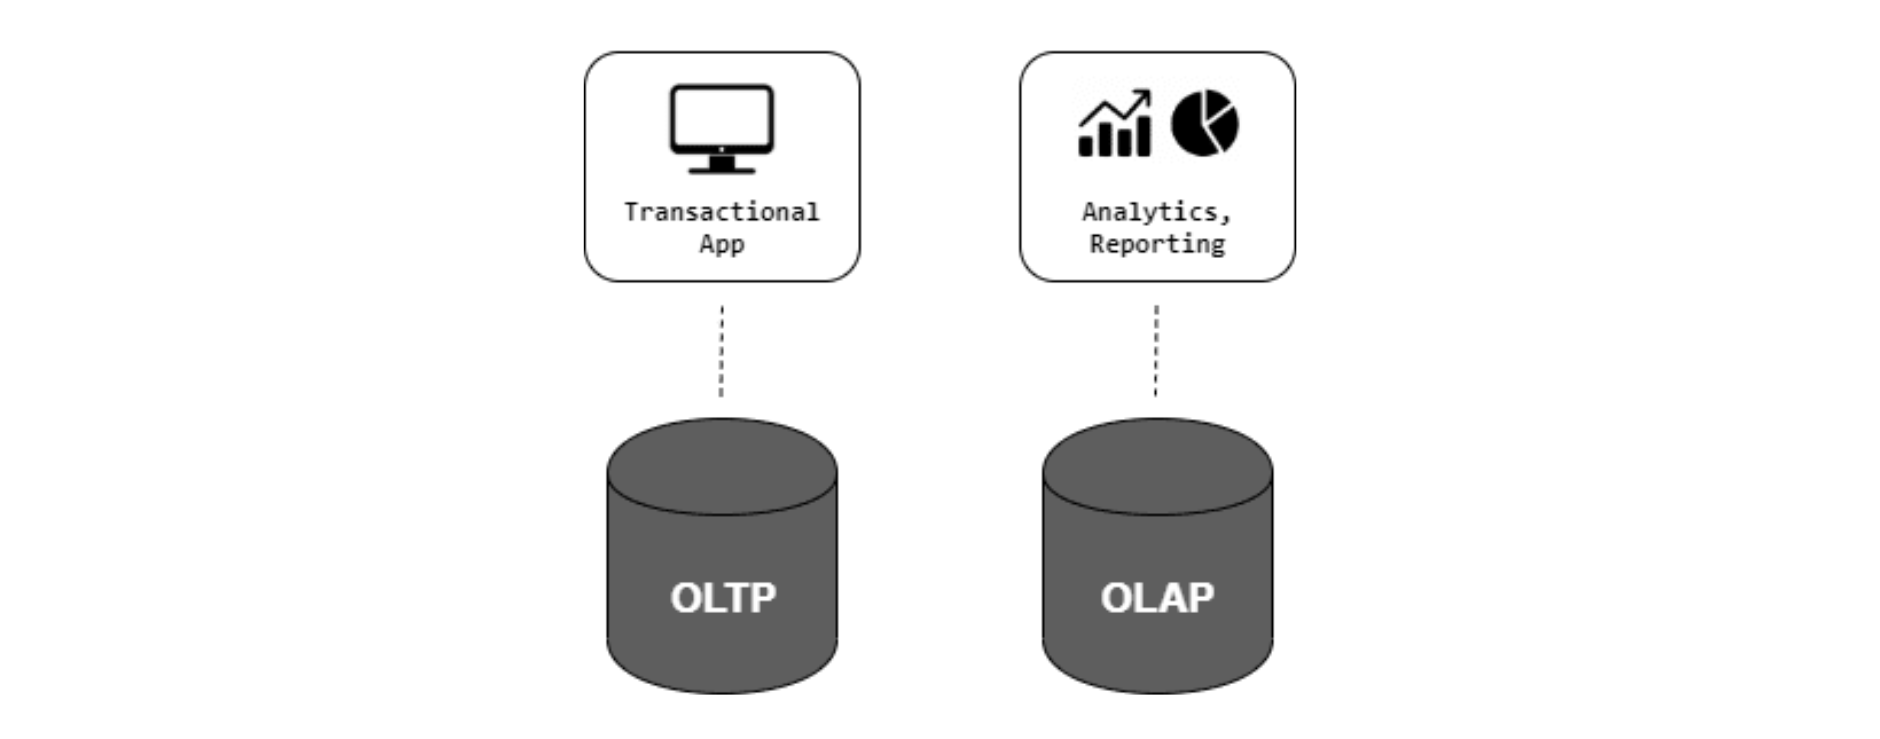 olap-schematics-example